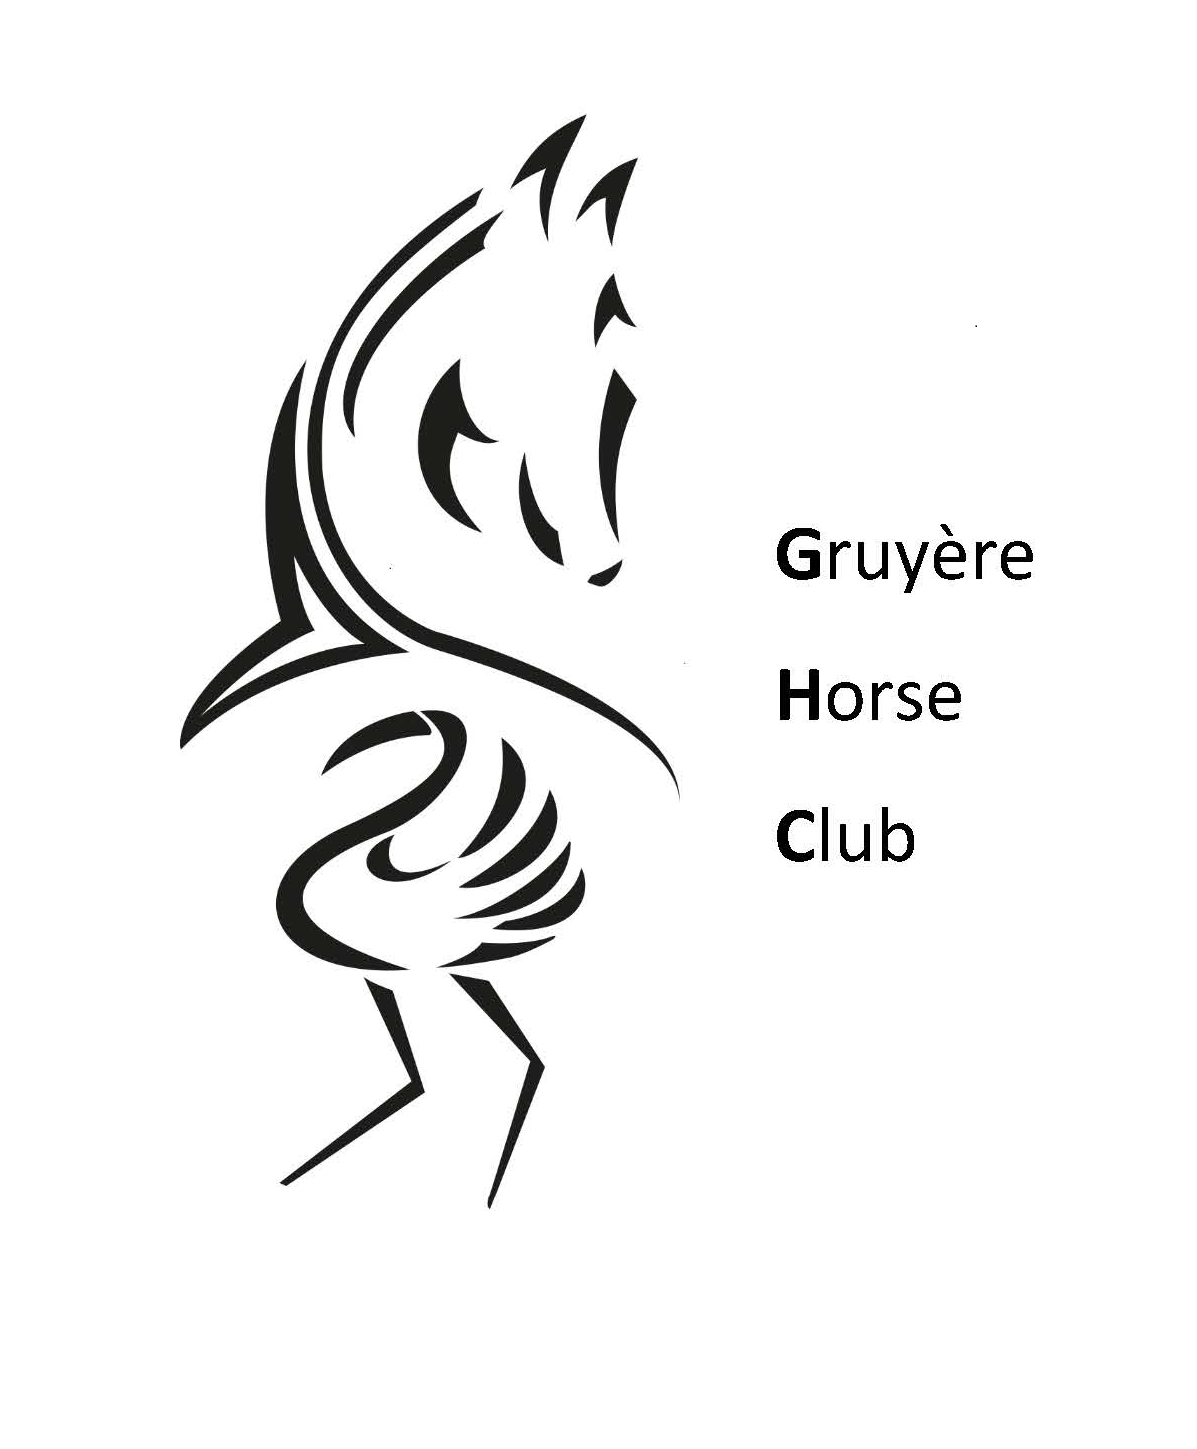 www.gruyerehorseclub.ch